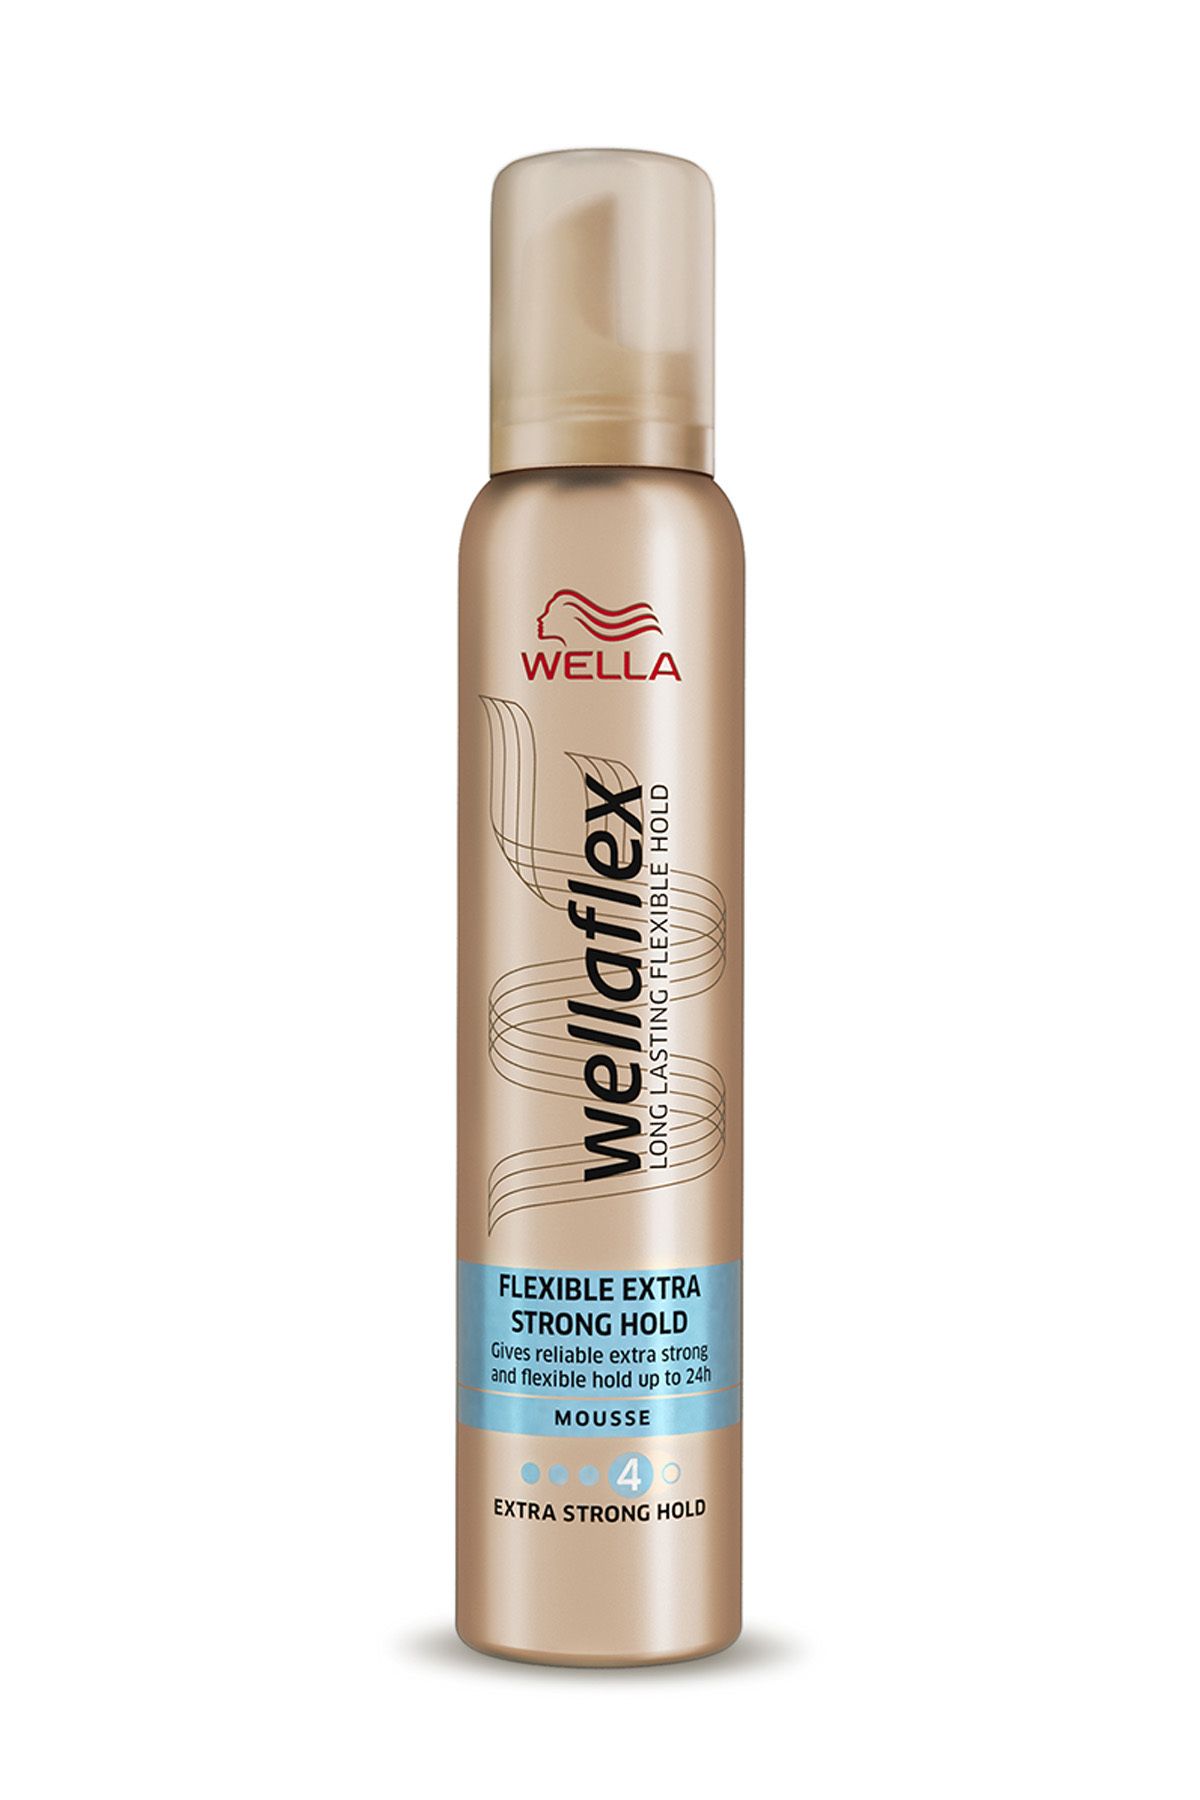 Wella Wellaflex 2nd Day Volume Extra Strong Hold Saç Köpüğü - 200 ml